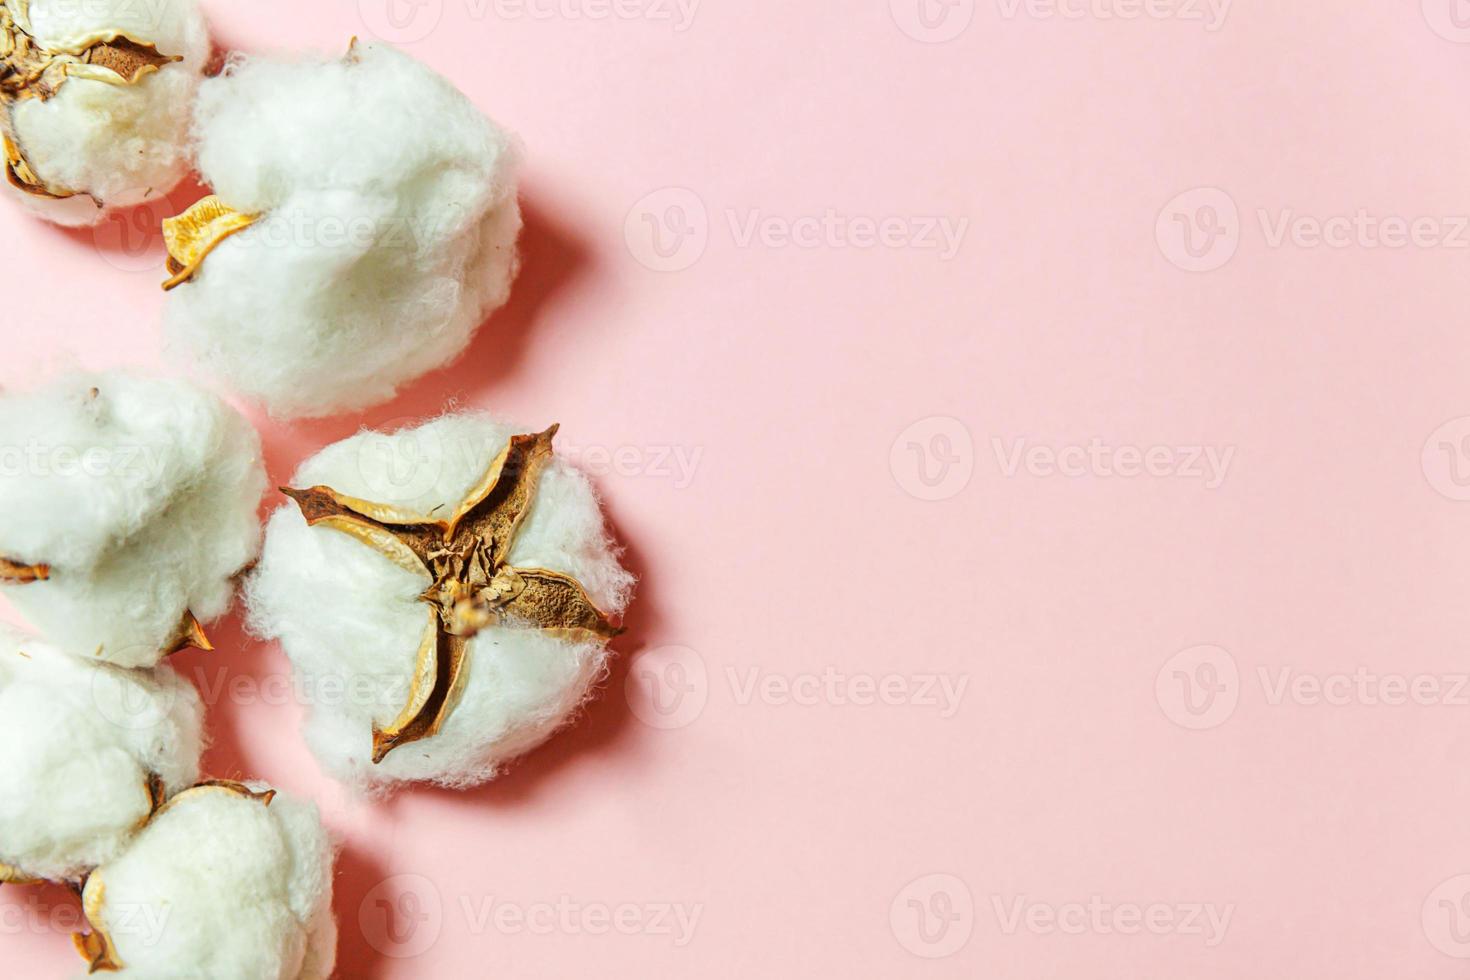 helt enkelt minimal design med vita bomullsblommor isolerade på rosa pastellbakgrund. tyg trasa mjukhet naturliga ekologiska gård allergi koncept. foto